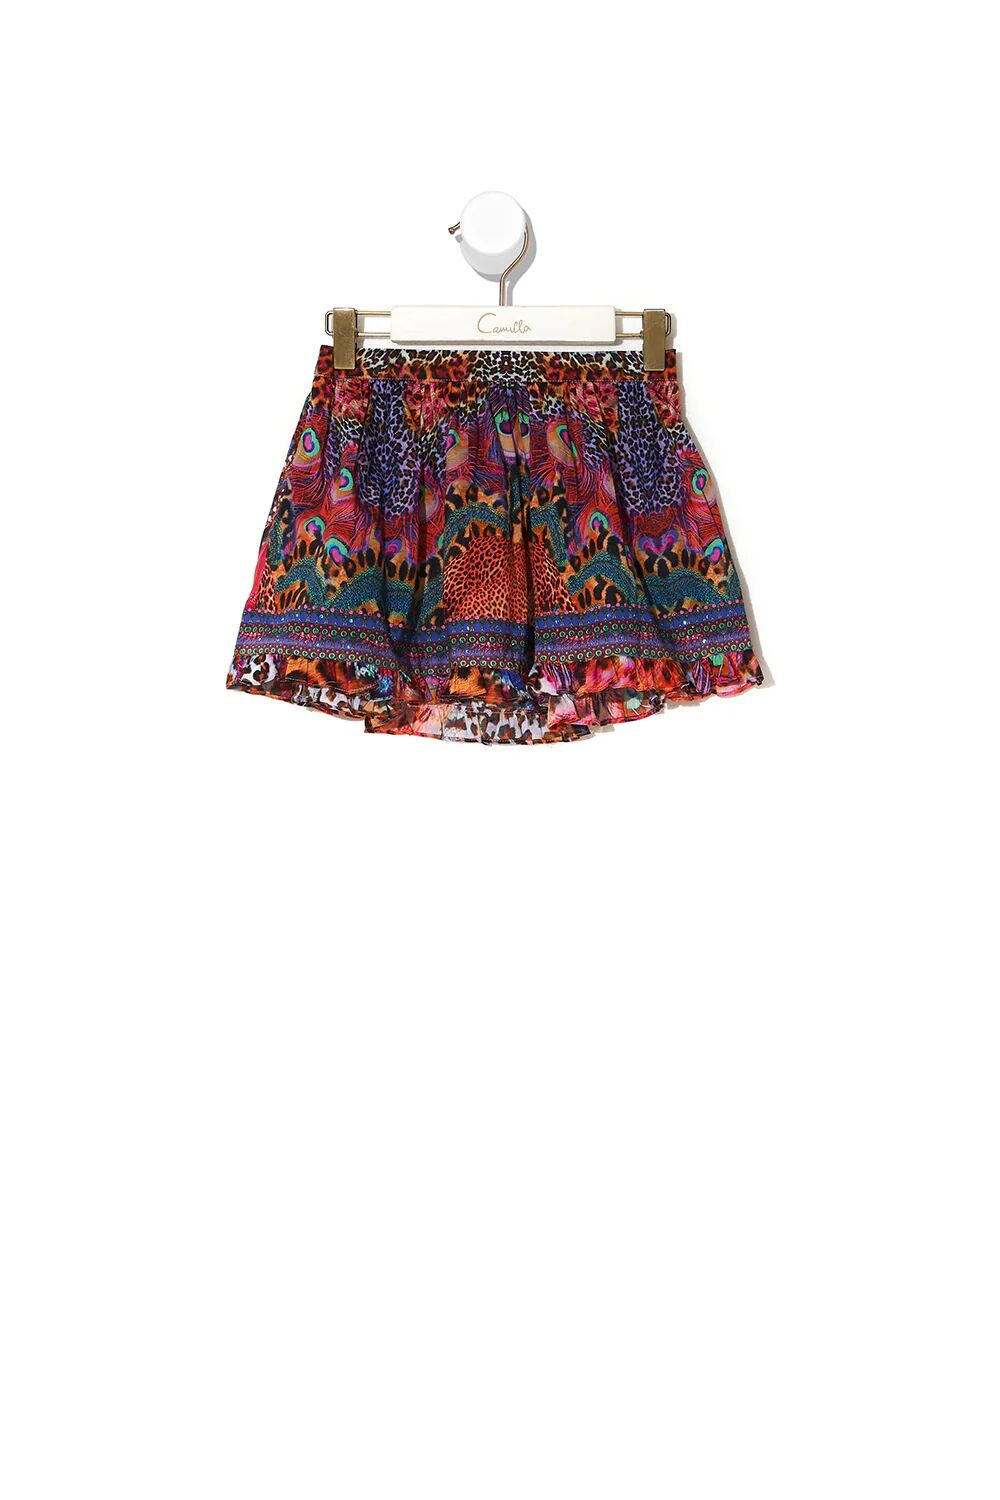 Camilla eBoutique Kids Frill Mini Skirt 12-14 Xanadu Rising, 14  - Size: 14